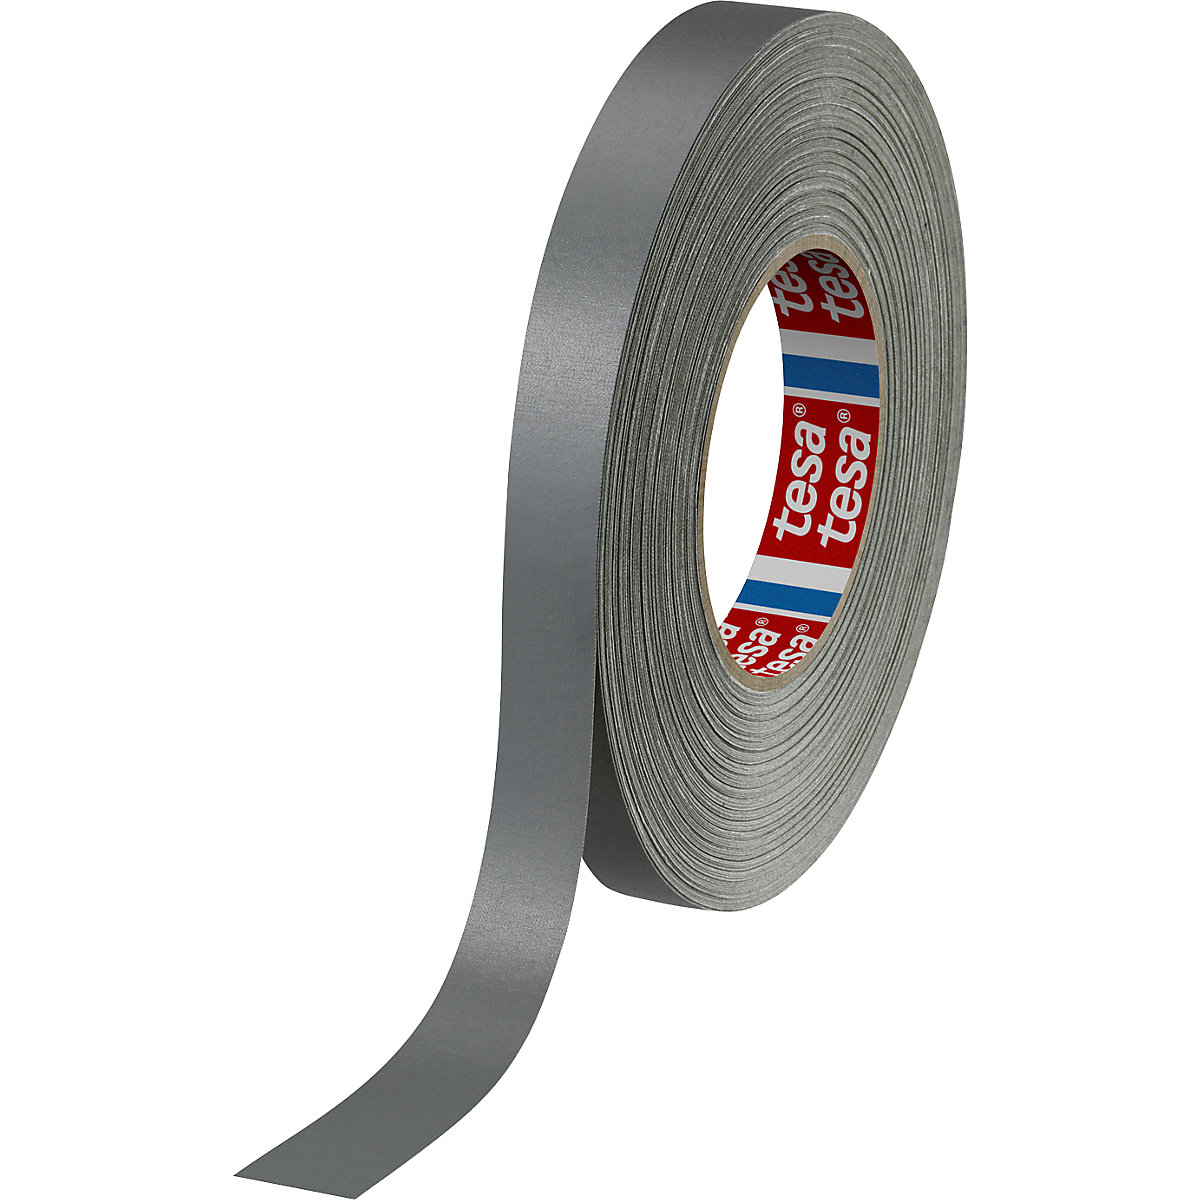 Fabric tape – tesa, tesaband® 4651 premium, pack of 48 rolls, silver, tape width 19 mm-4